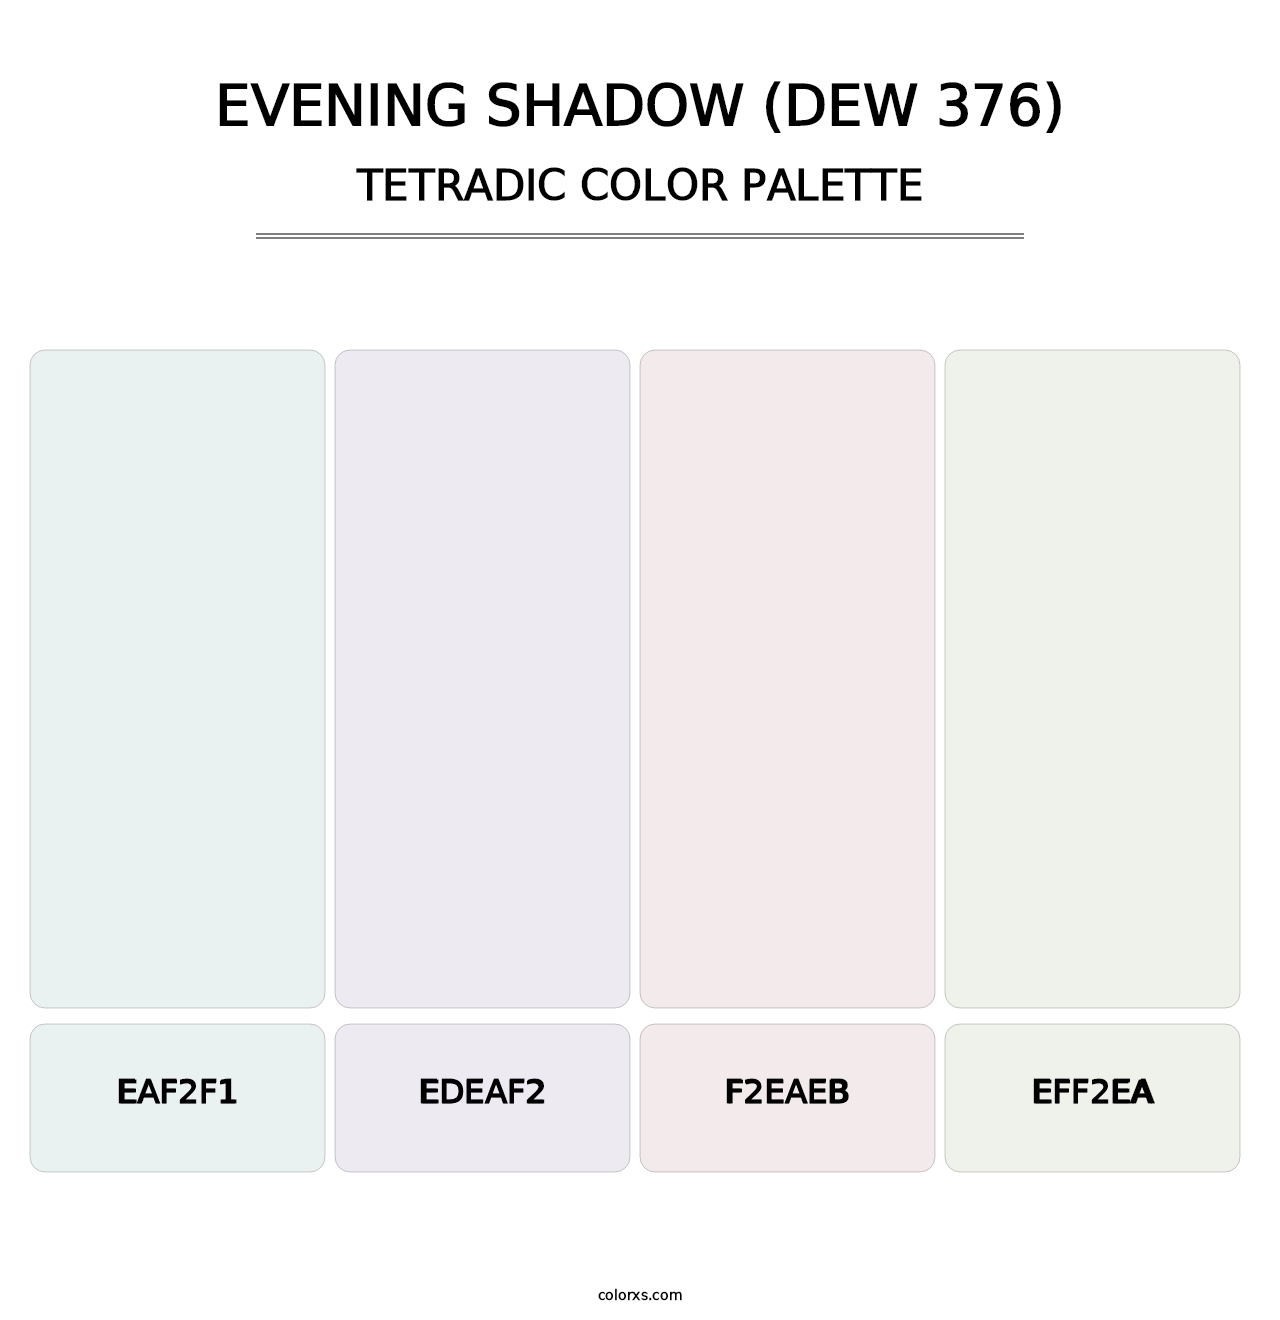 Evening Shadow (DEW 376) - Tetradic Color Palette